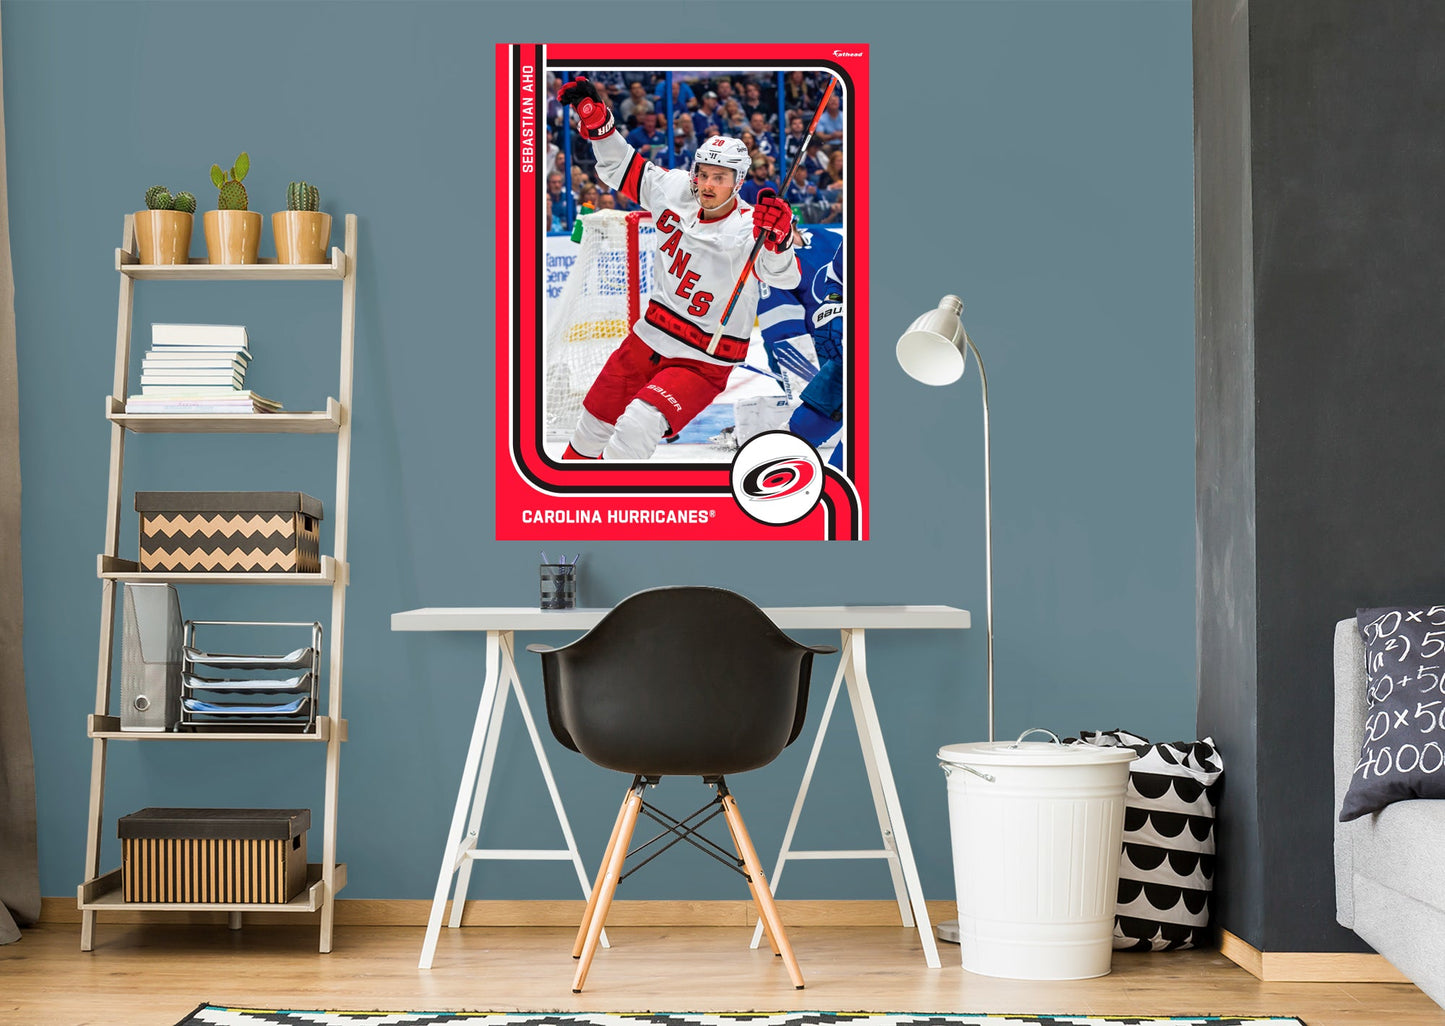 Carolina Hurricanes: Sebastian Aho Poster - Officially Licensed NHL Removable Adhesive Decal